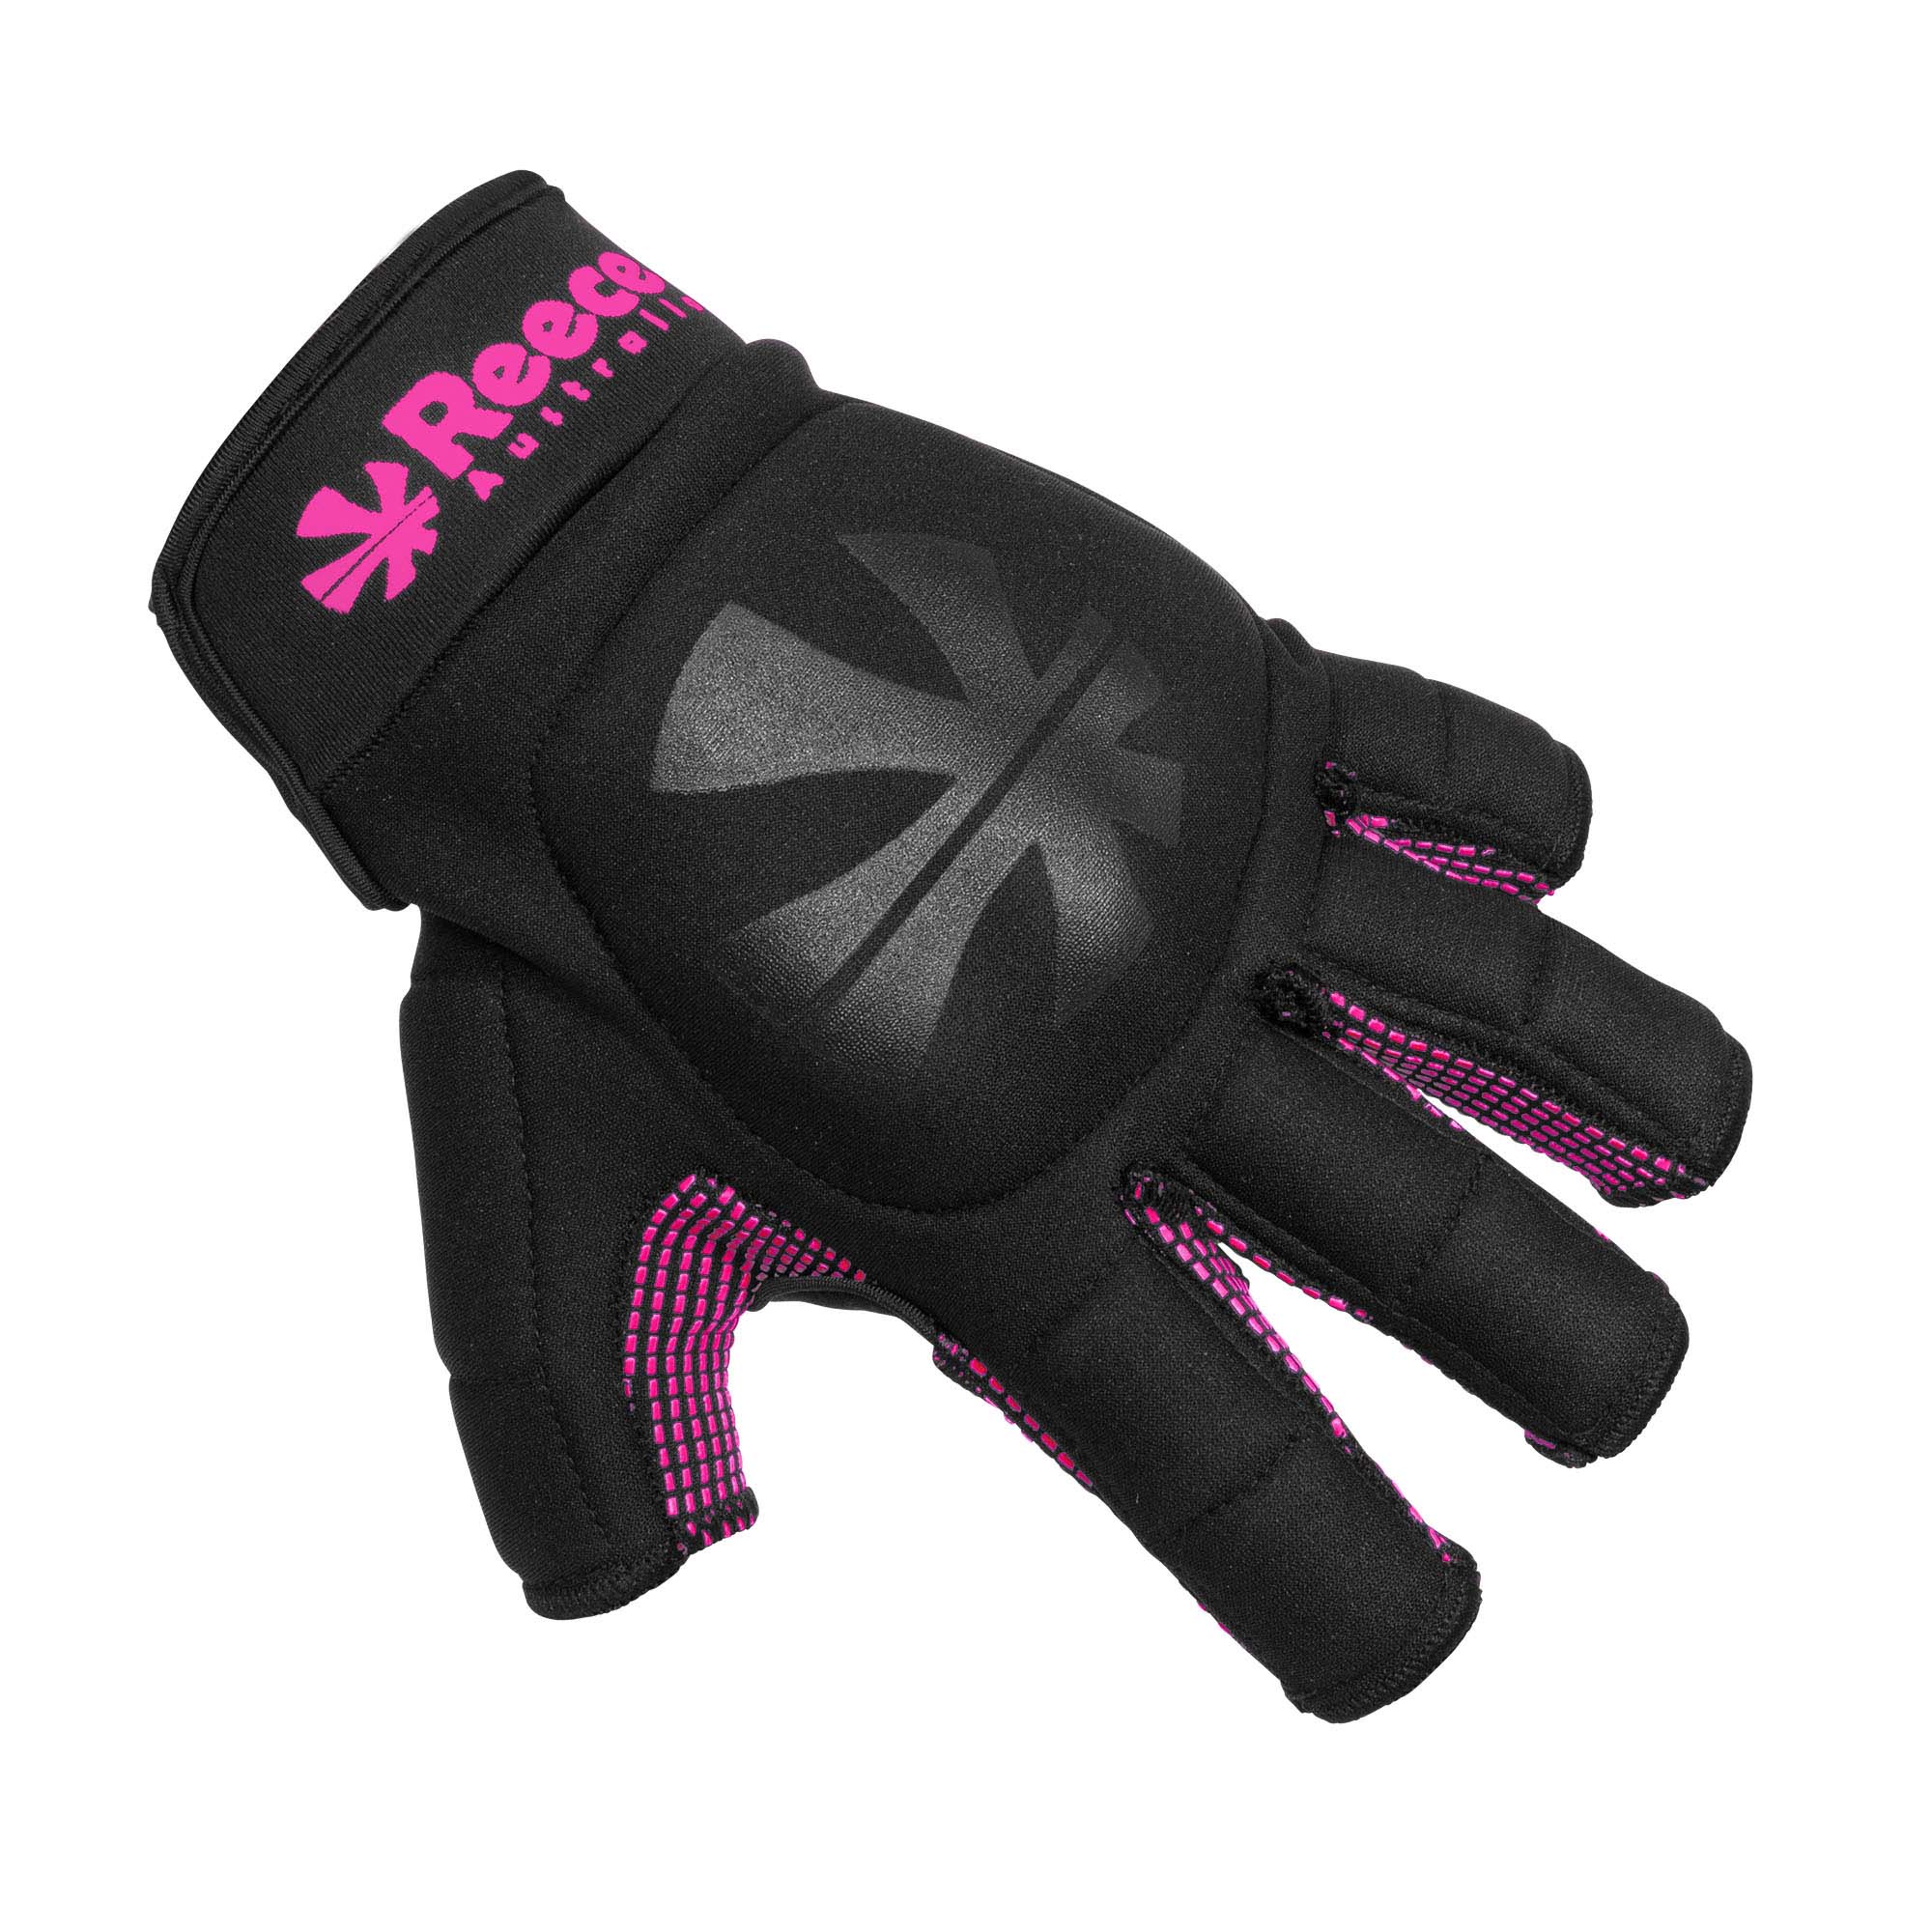 reece glove control protection